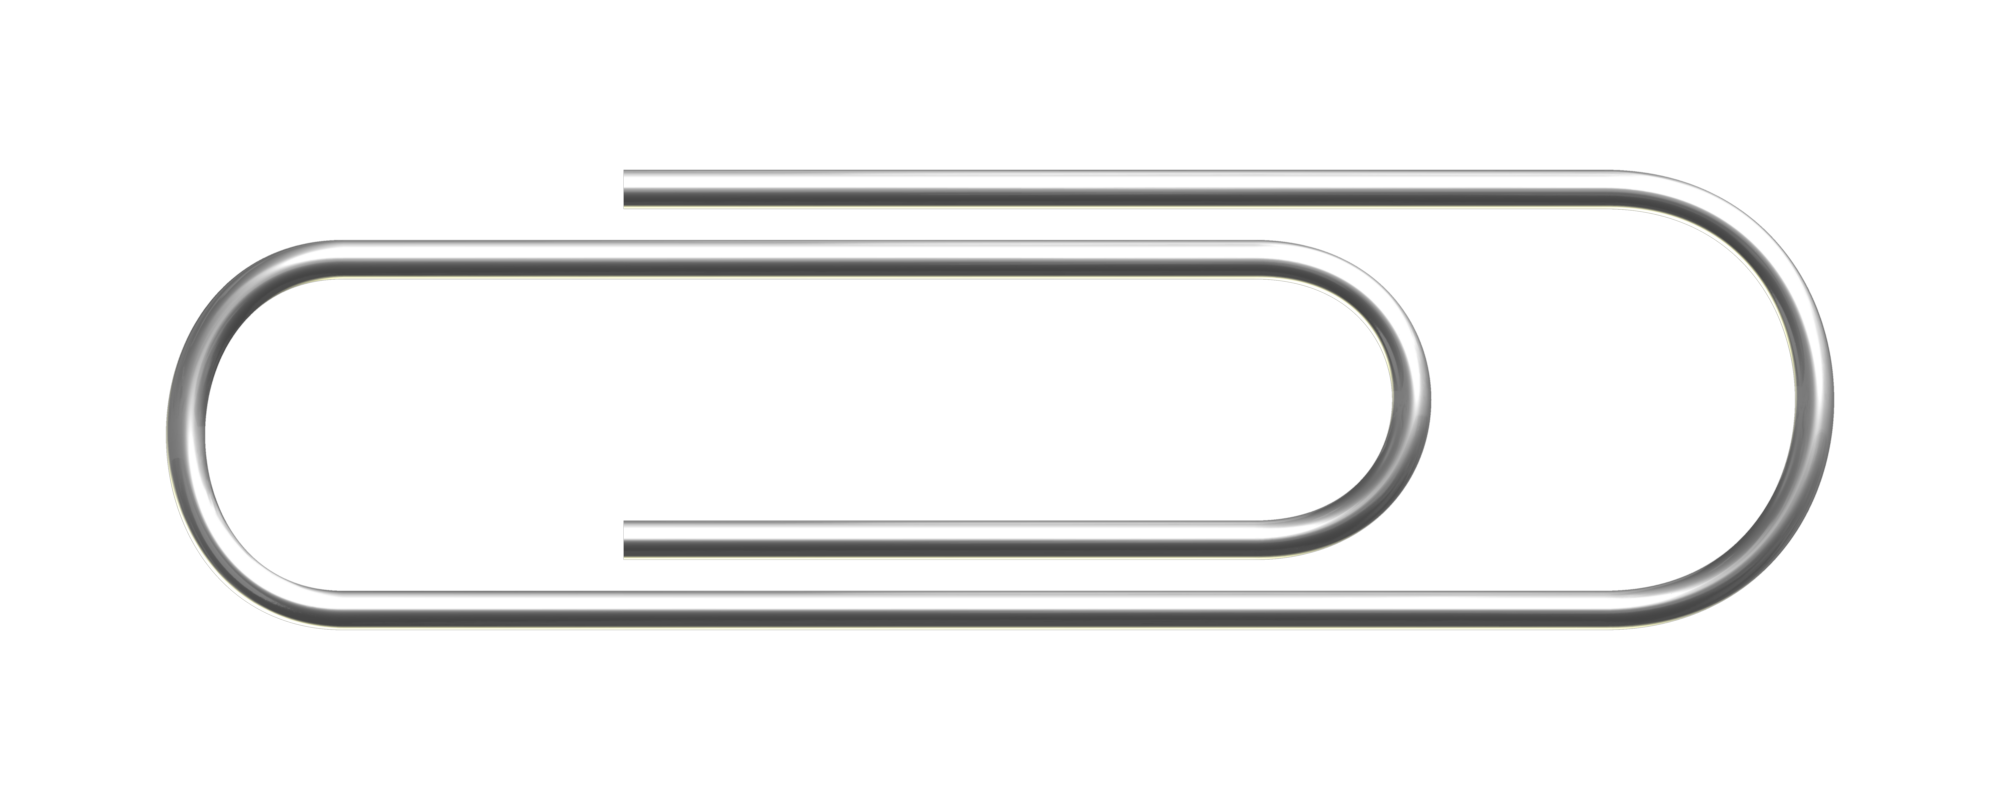 paper clip clipart black and white